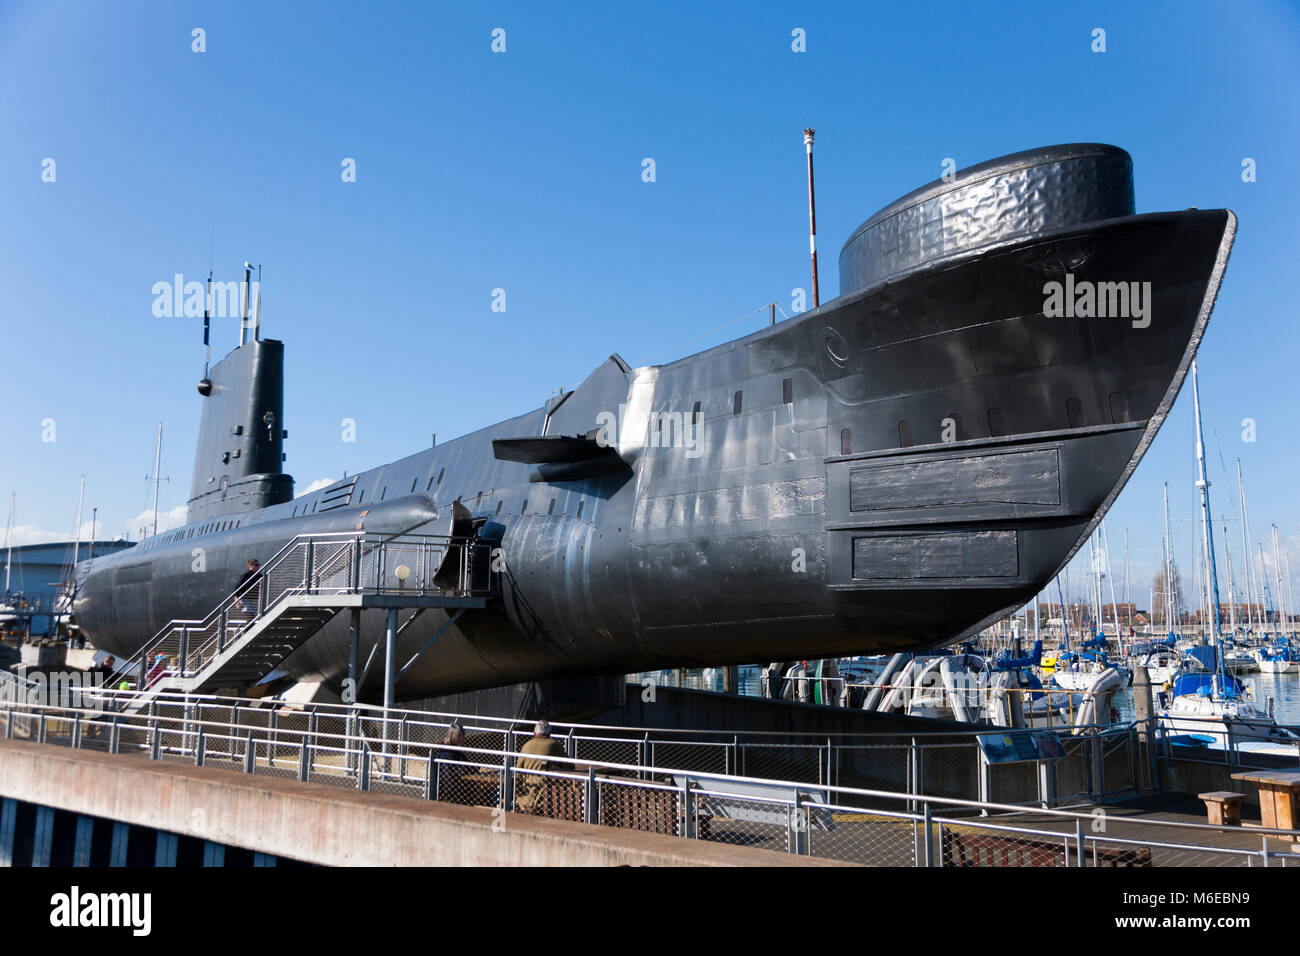 HMS Alliance, a Royal Navy A-class, Amphion-class or Acheron-class submarine. Now a memorial & museum ship at Royal Navy Submarine Museum, Gosport UK Stock Photo